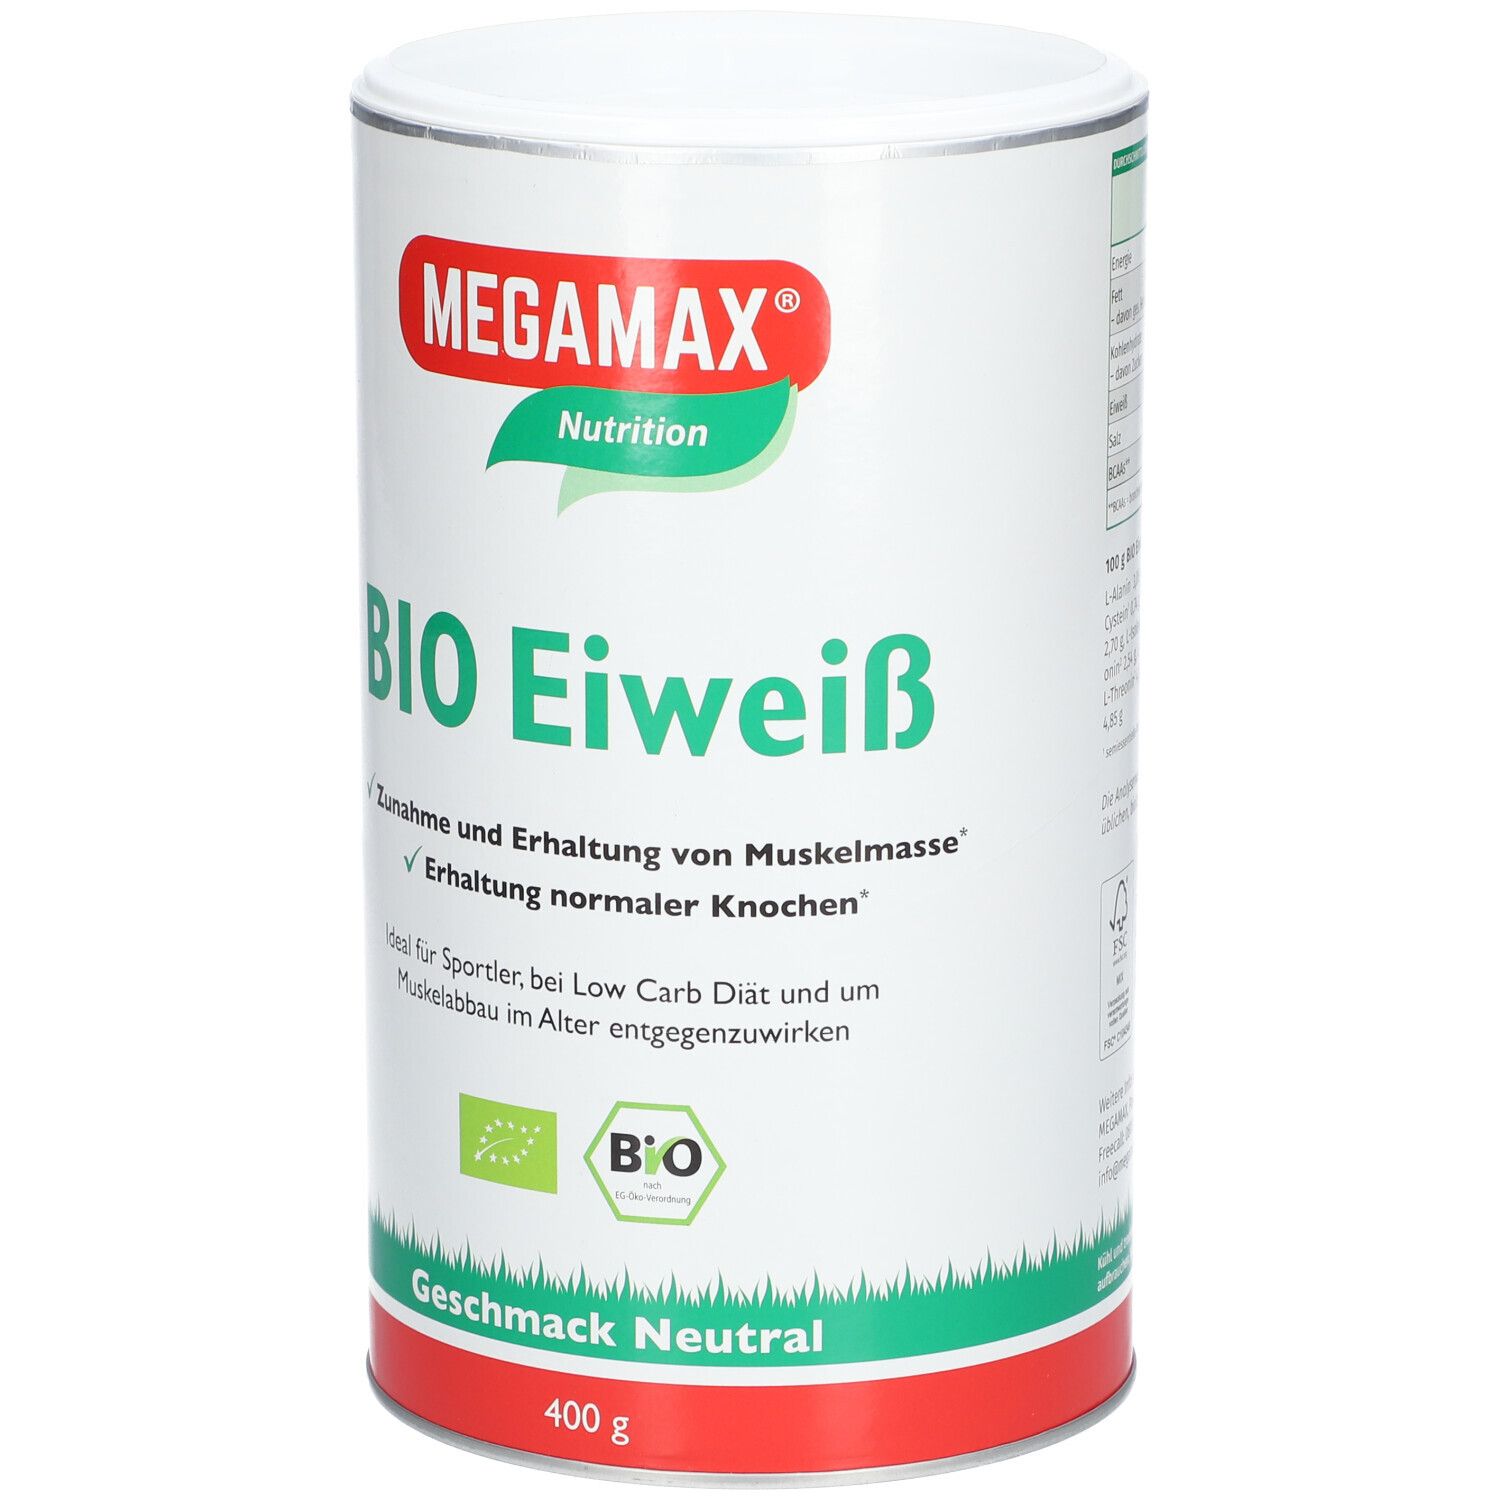 MEGAMAX® Nutrition BIO Eiweiß Geschmack-Neutral